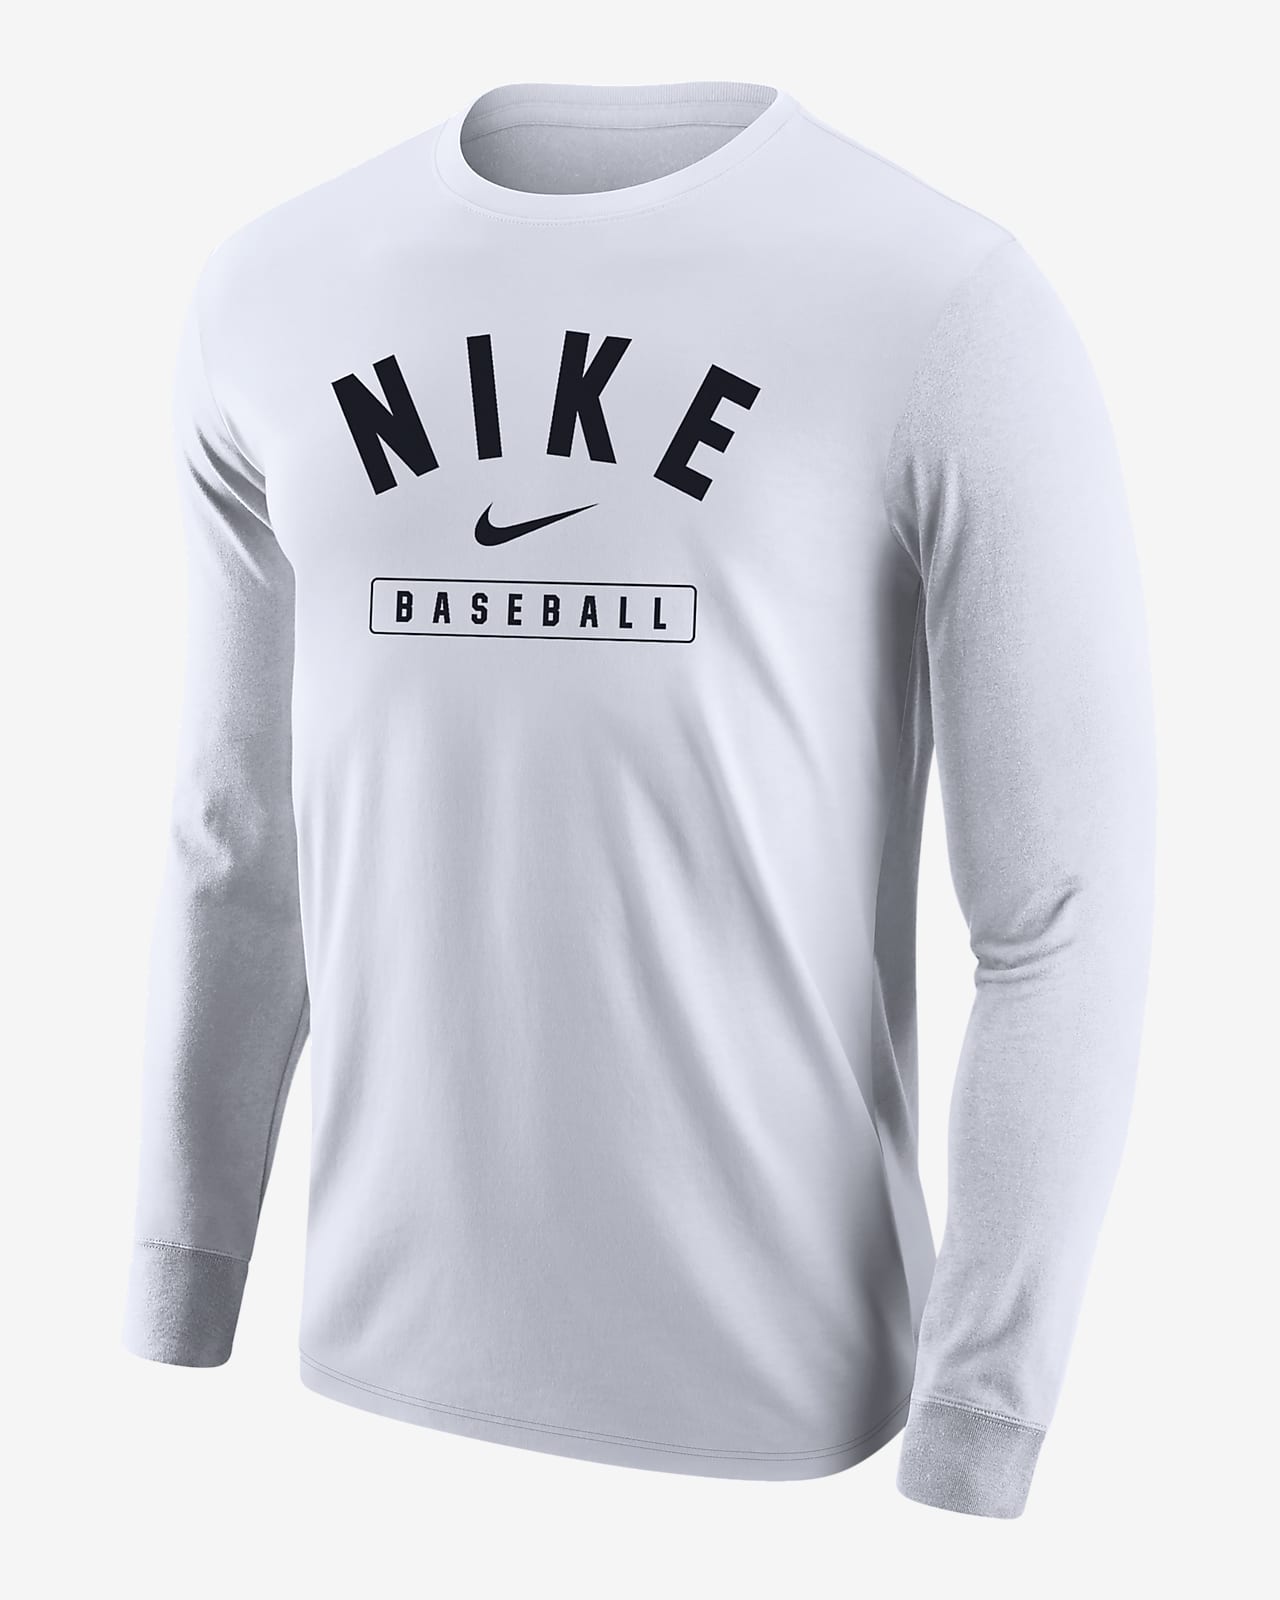 Nike Baseball Men's Long-Sleeve T-Shirt